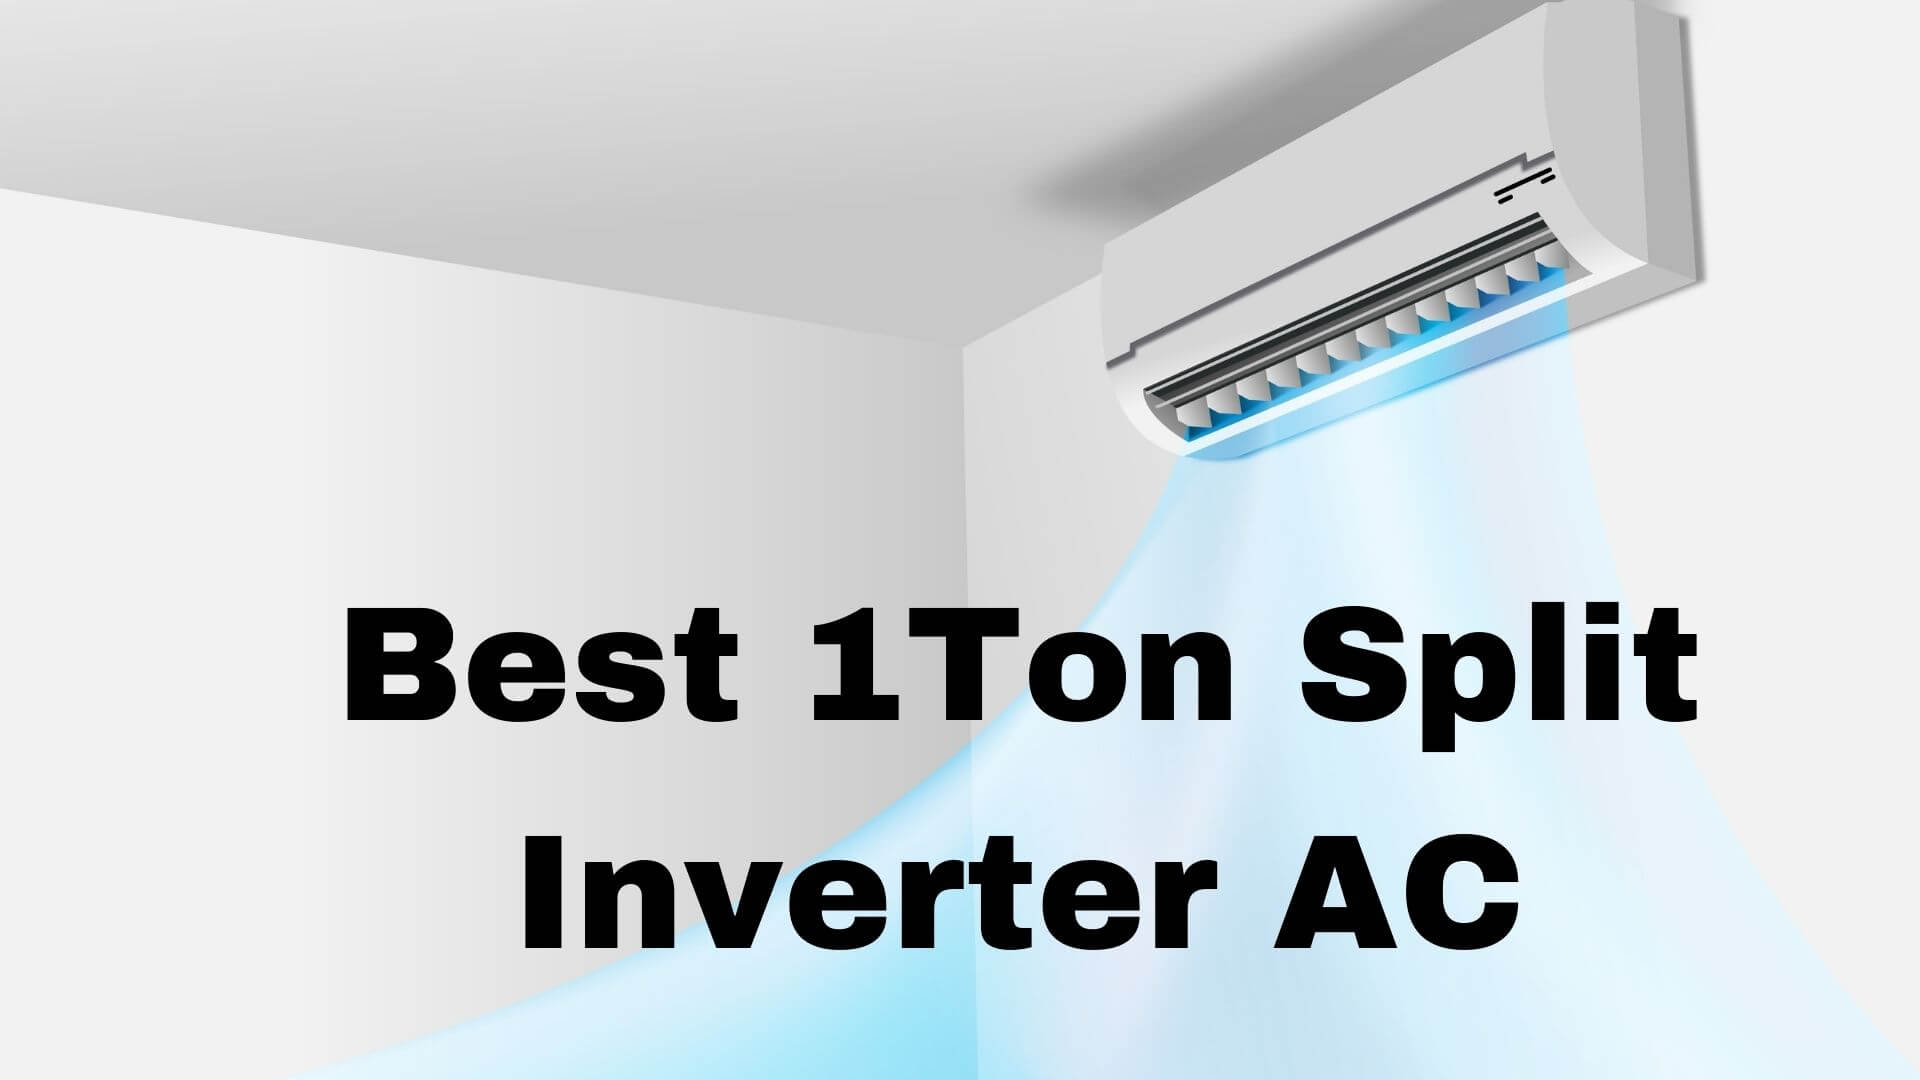 9 Best 1 Ton Split Inverter AC to Buy in India